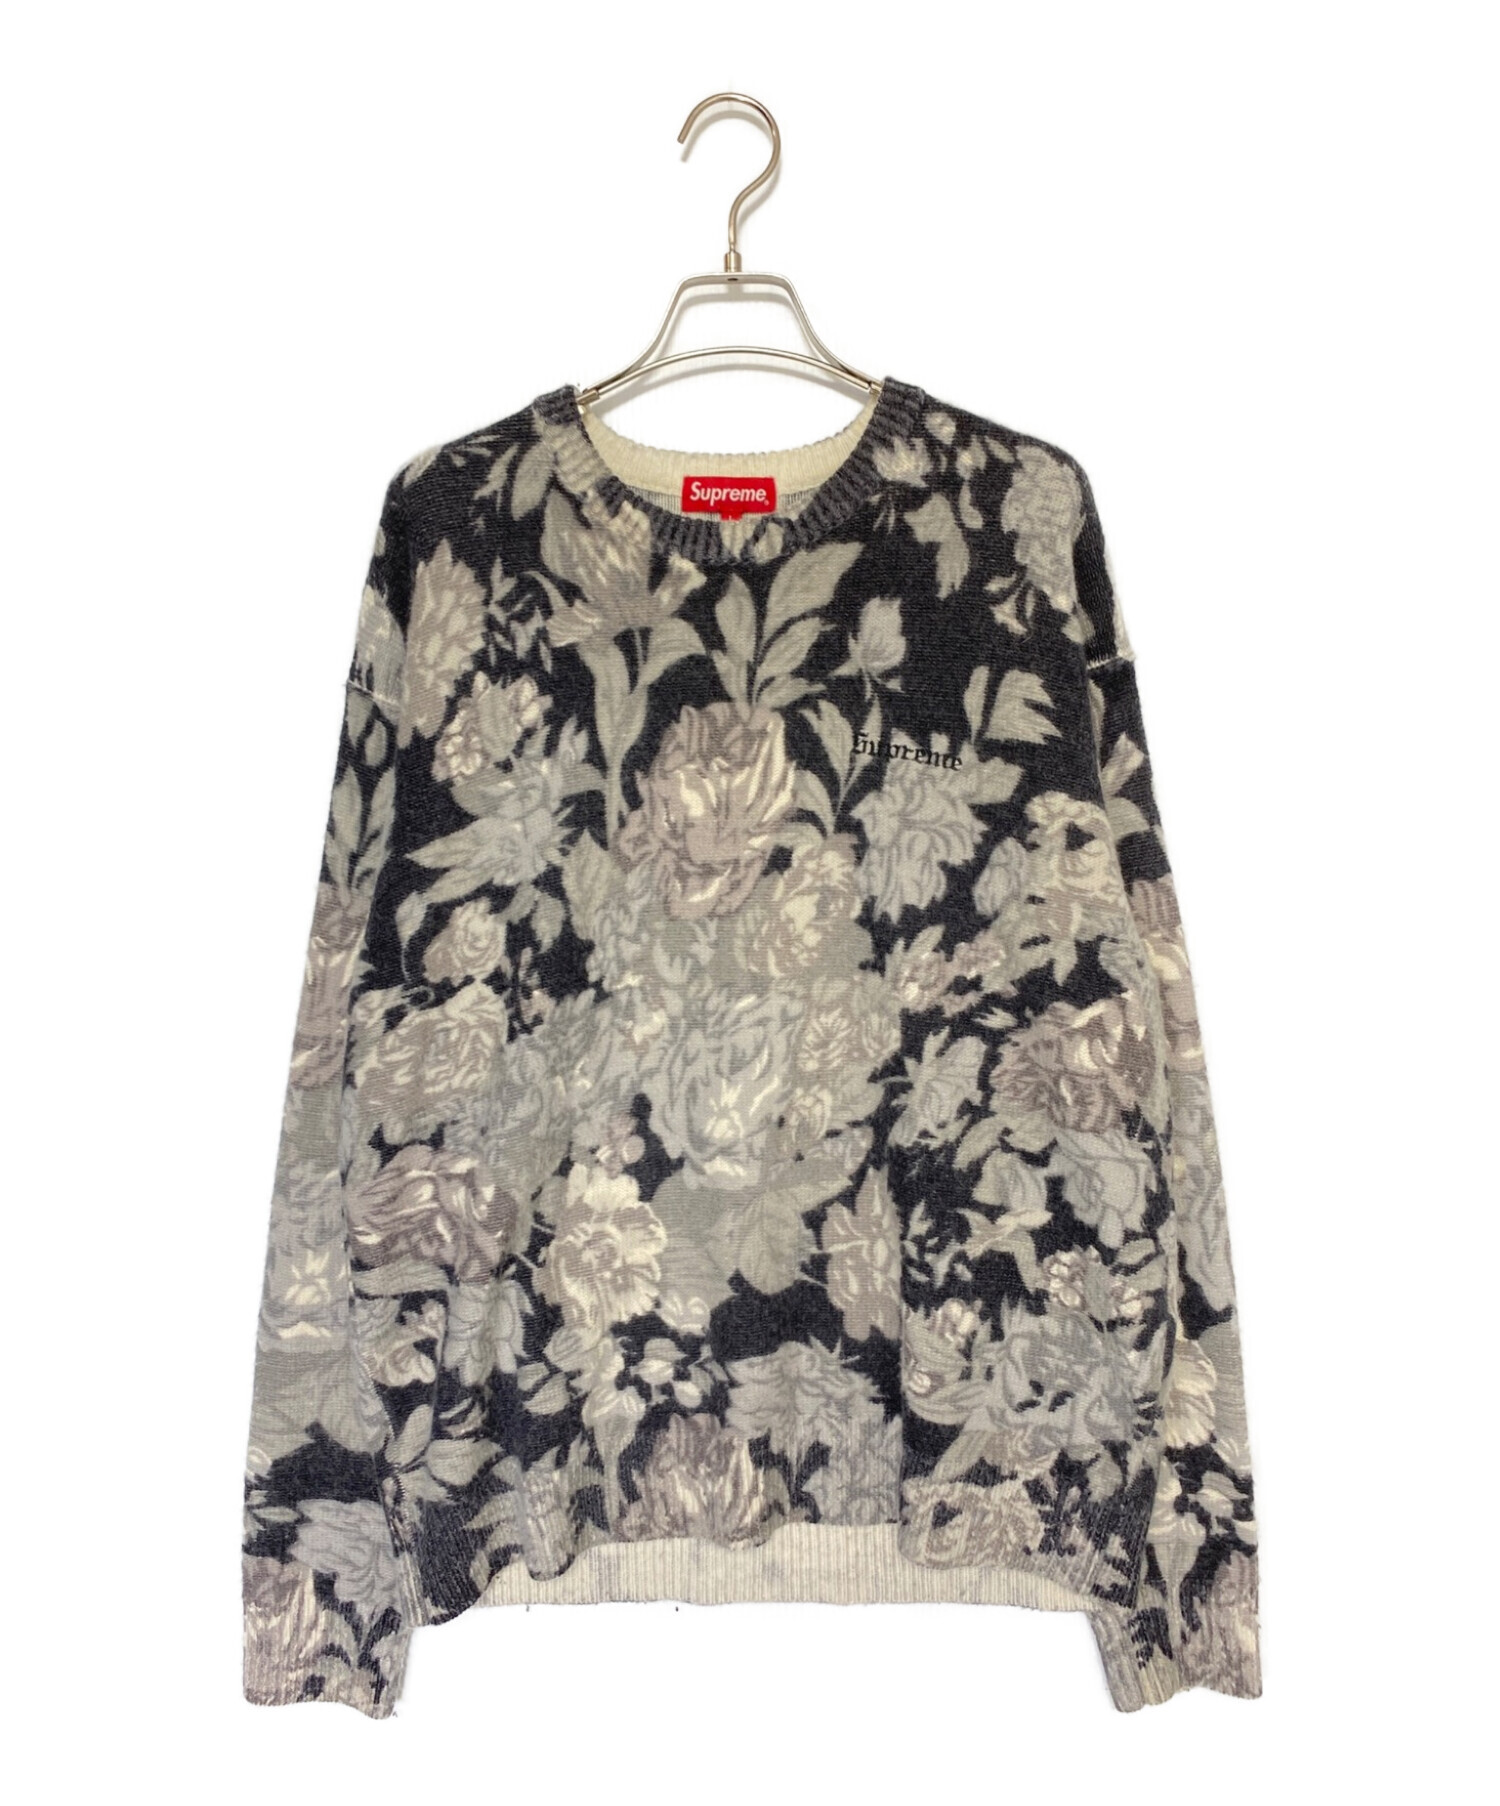 Supreme Printed Floral Angora Sweater L53センチ